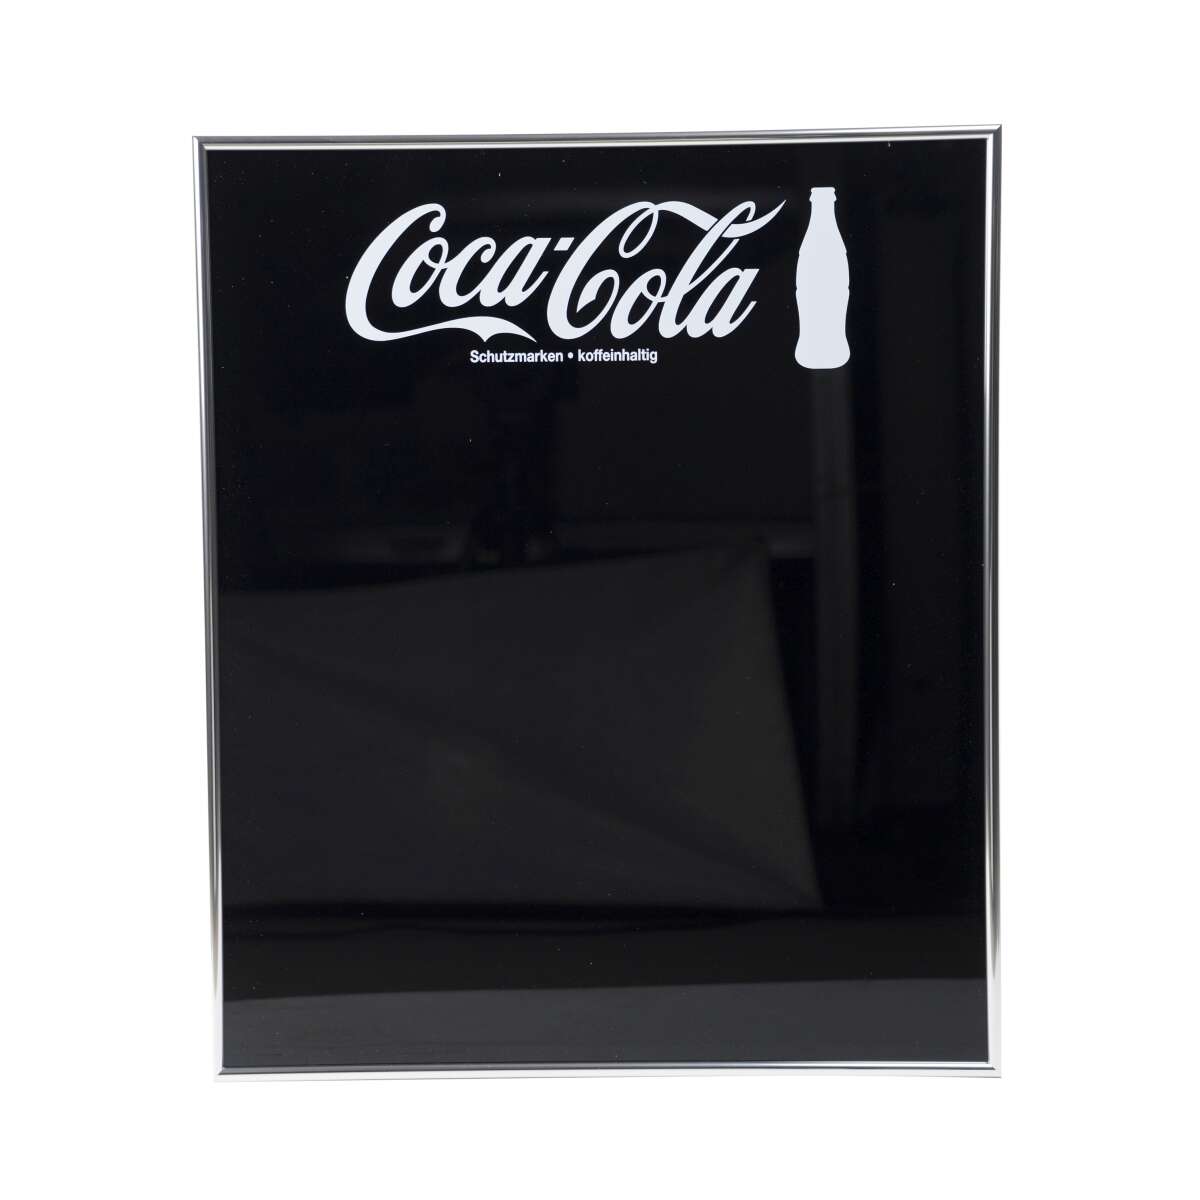 https://barmeister24.de/media/image/product/6248/lg/coca-cola-whiteboard-tafel-60x50-schwarz-stift-marker-schild-reklame-wand-deko.jpg